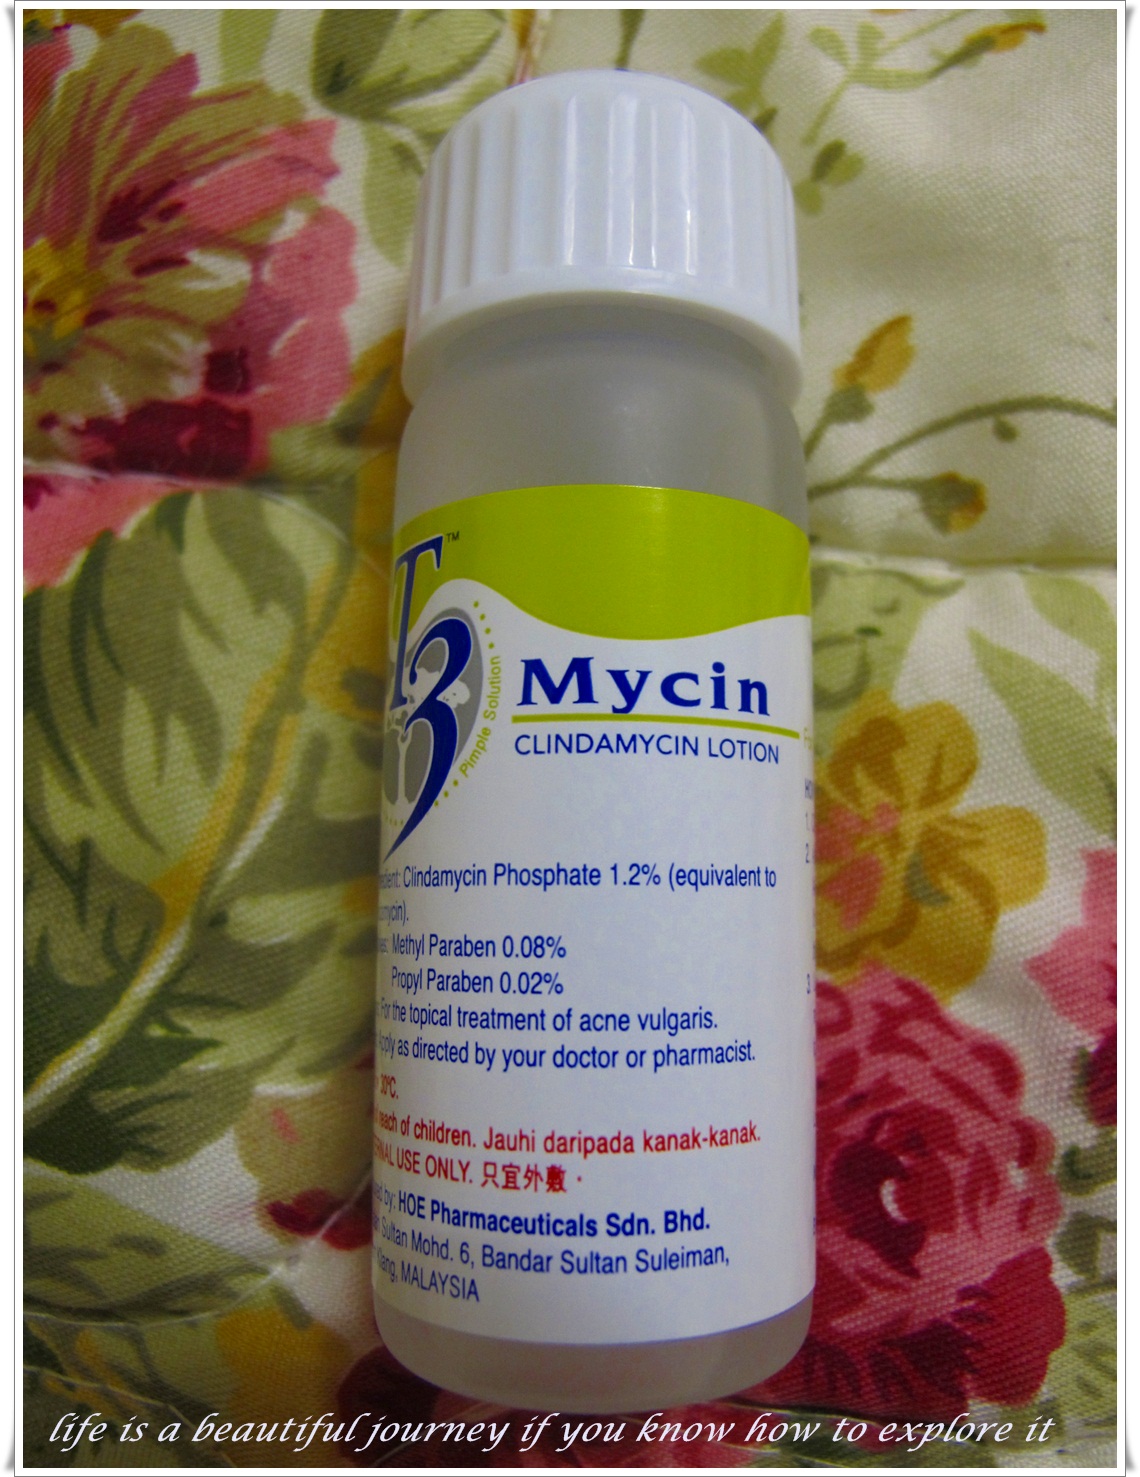 Ini cerita kita: T3 Mycin Clindamycin Lotion